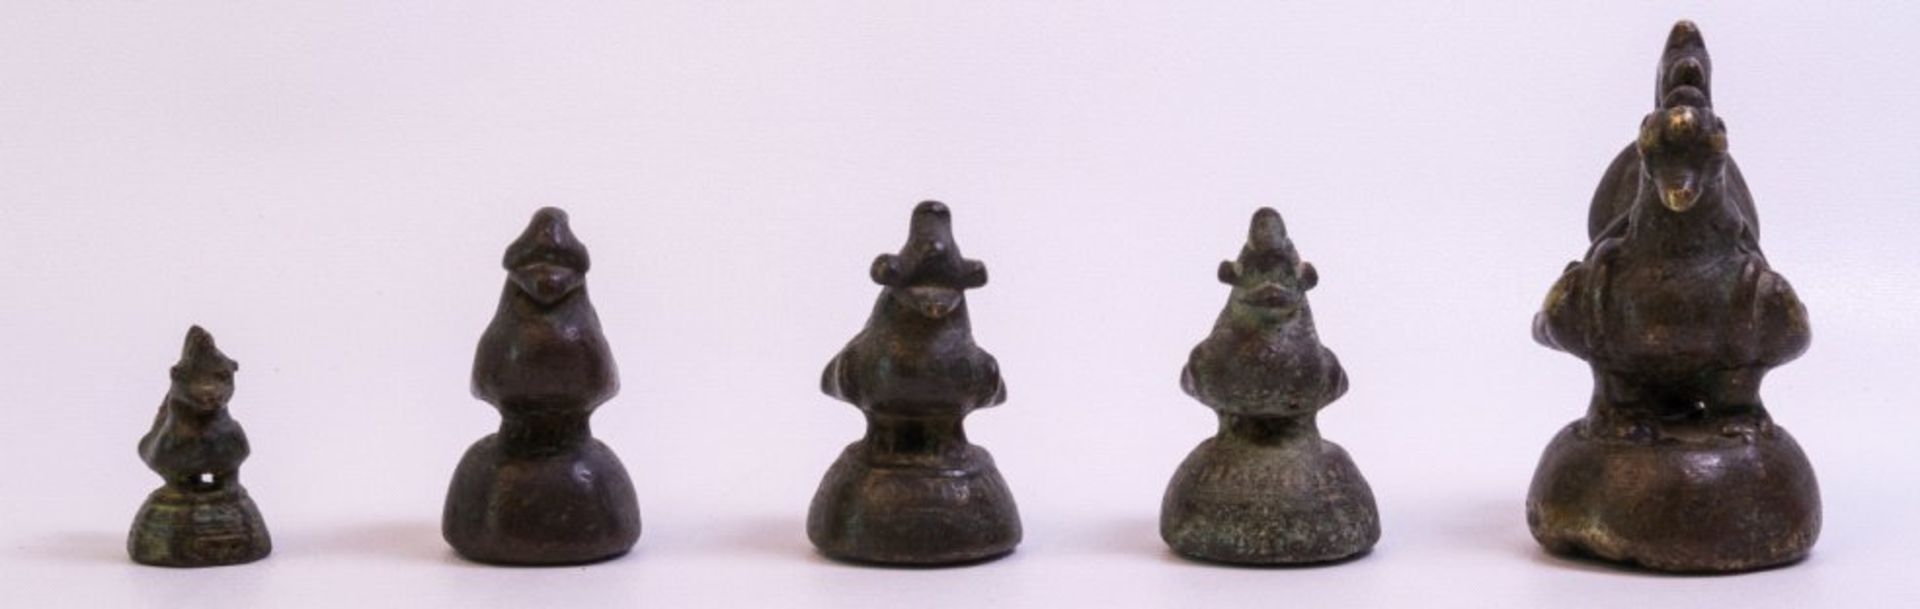 5 Opiumgewichte, Burma 17./18. Jh.Bronze, in Hühnerform, ca. H-3,5 bis 9 cmMindestpreis: 220 EUR